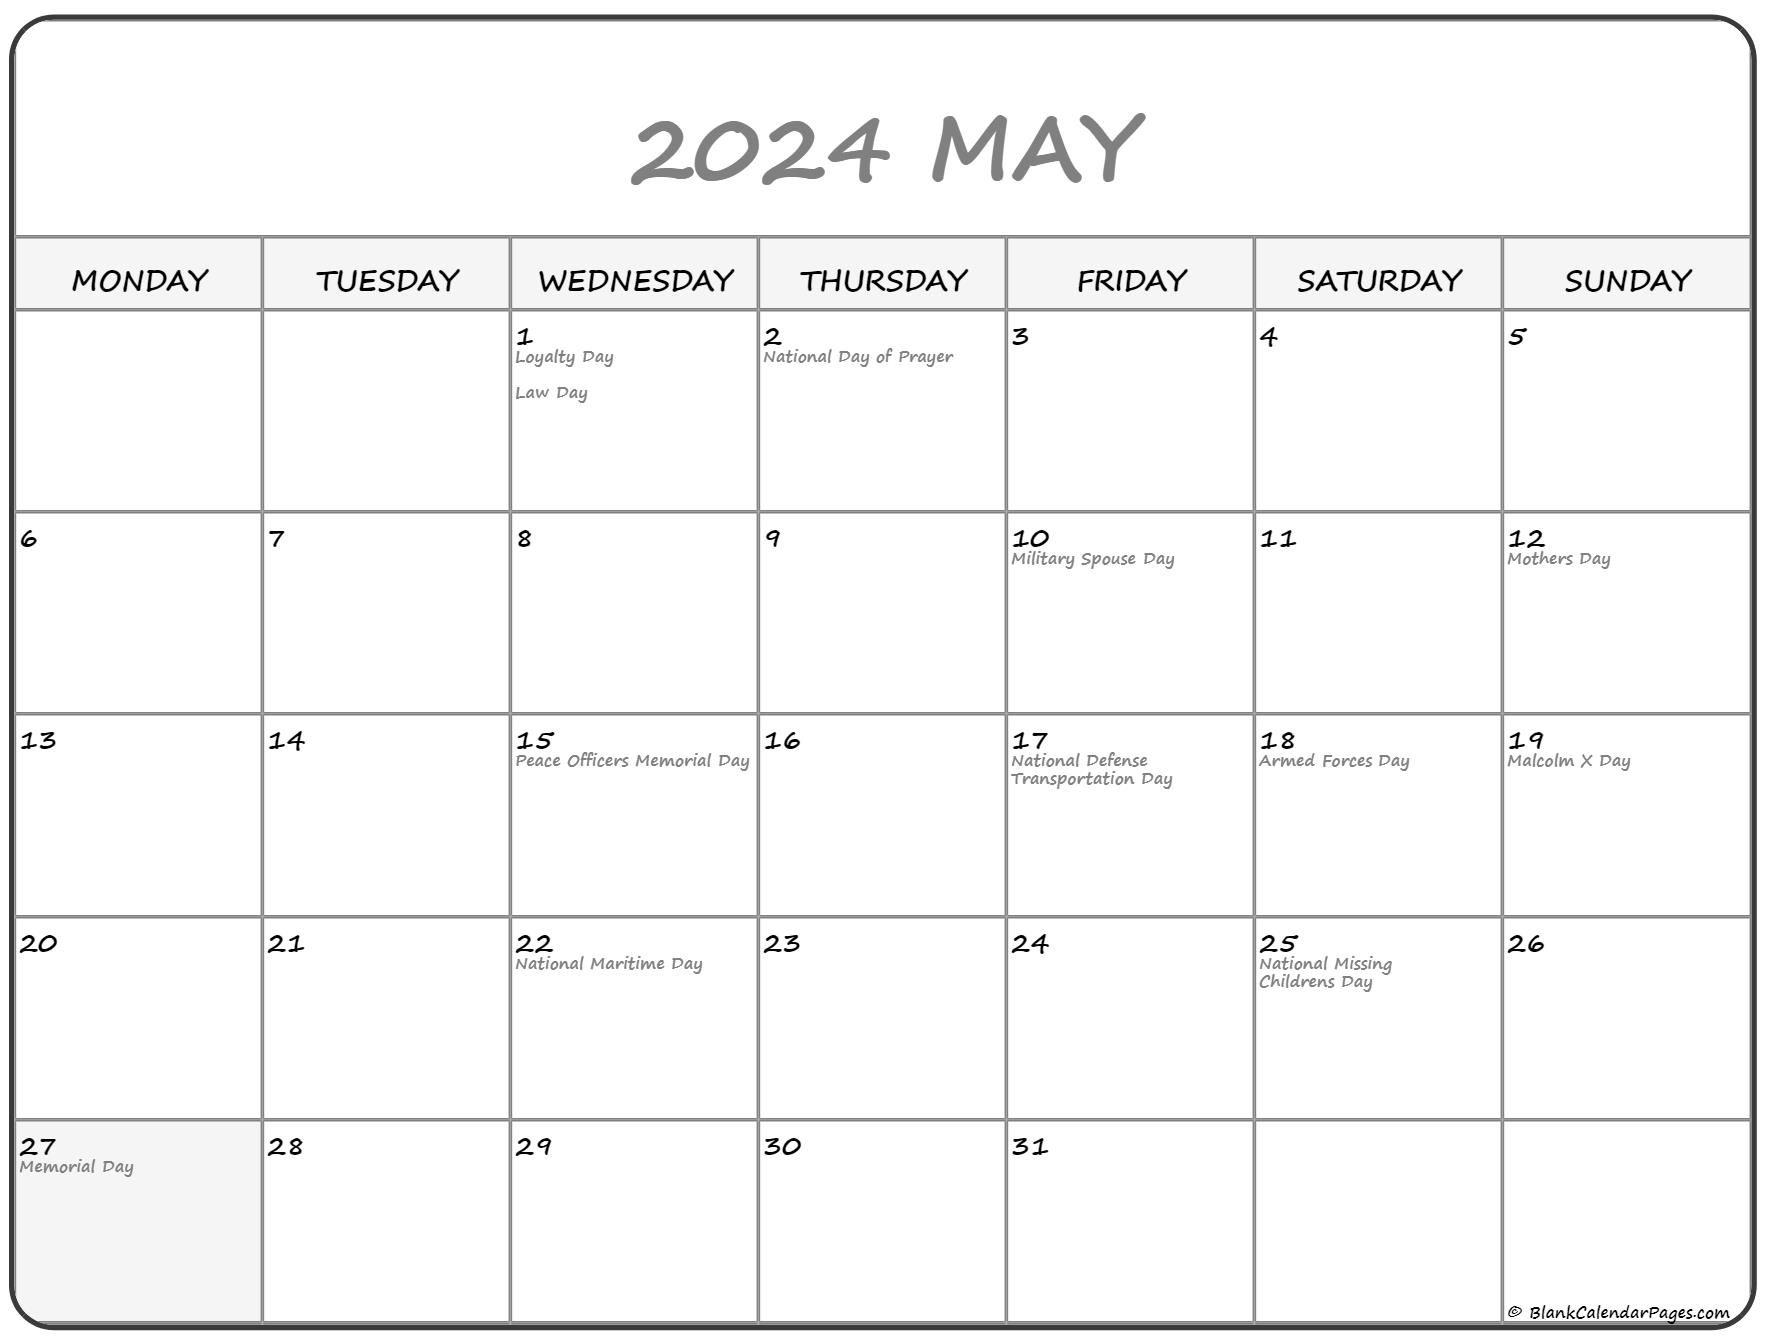 May 2023 Monday Calendar | Monday to Sunday